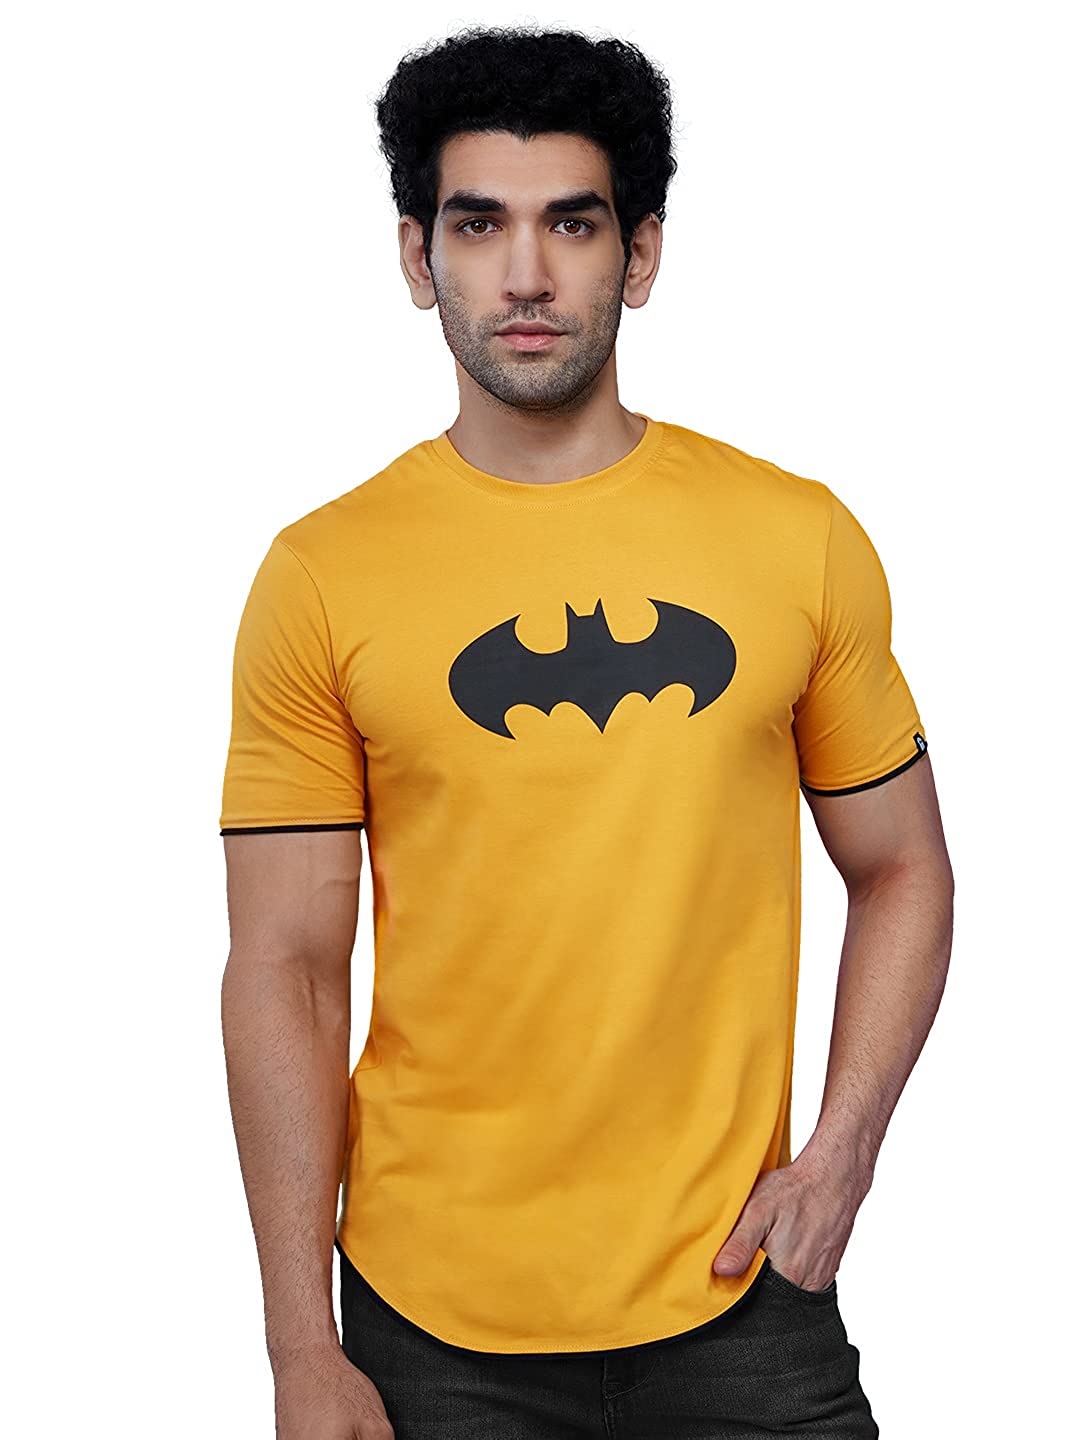 The souled store batman graphic printed cotton drop cut t-shirt 